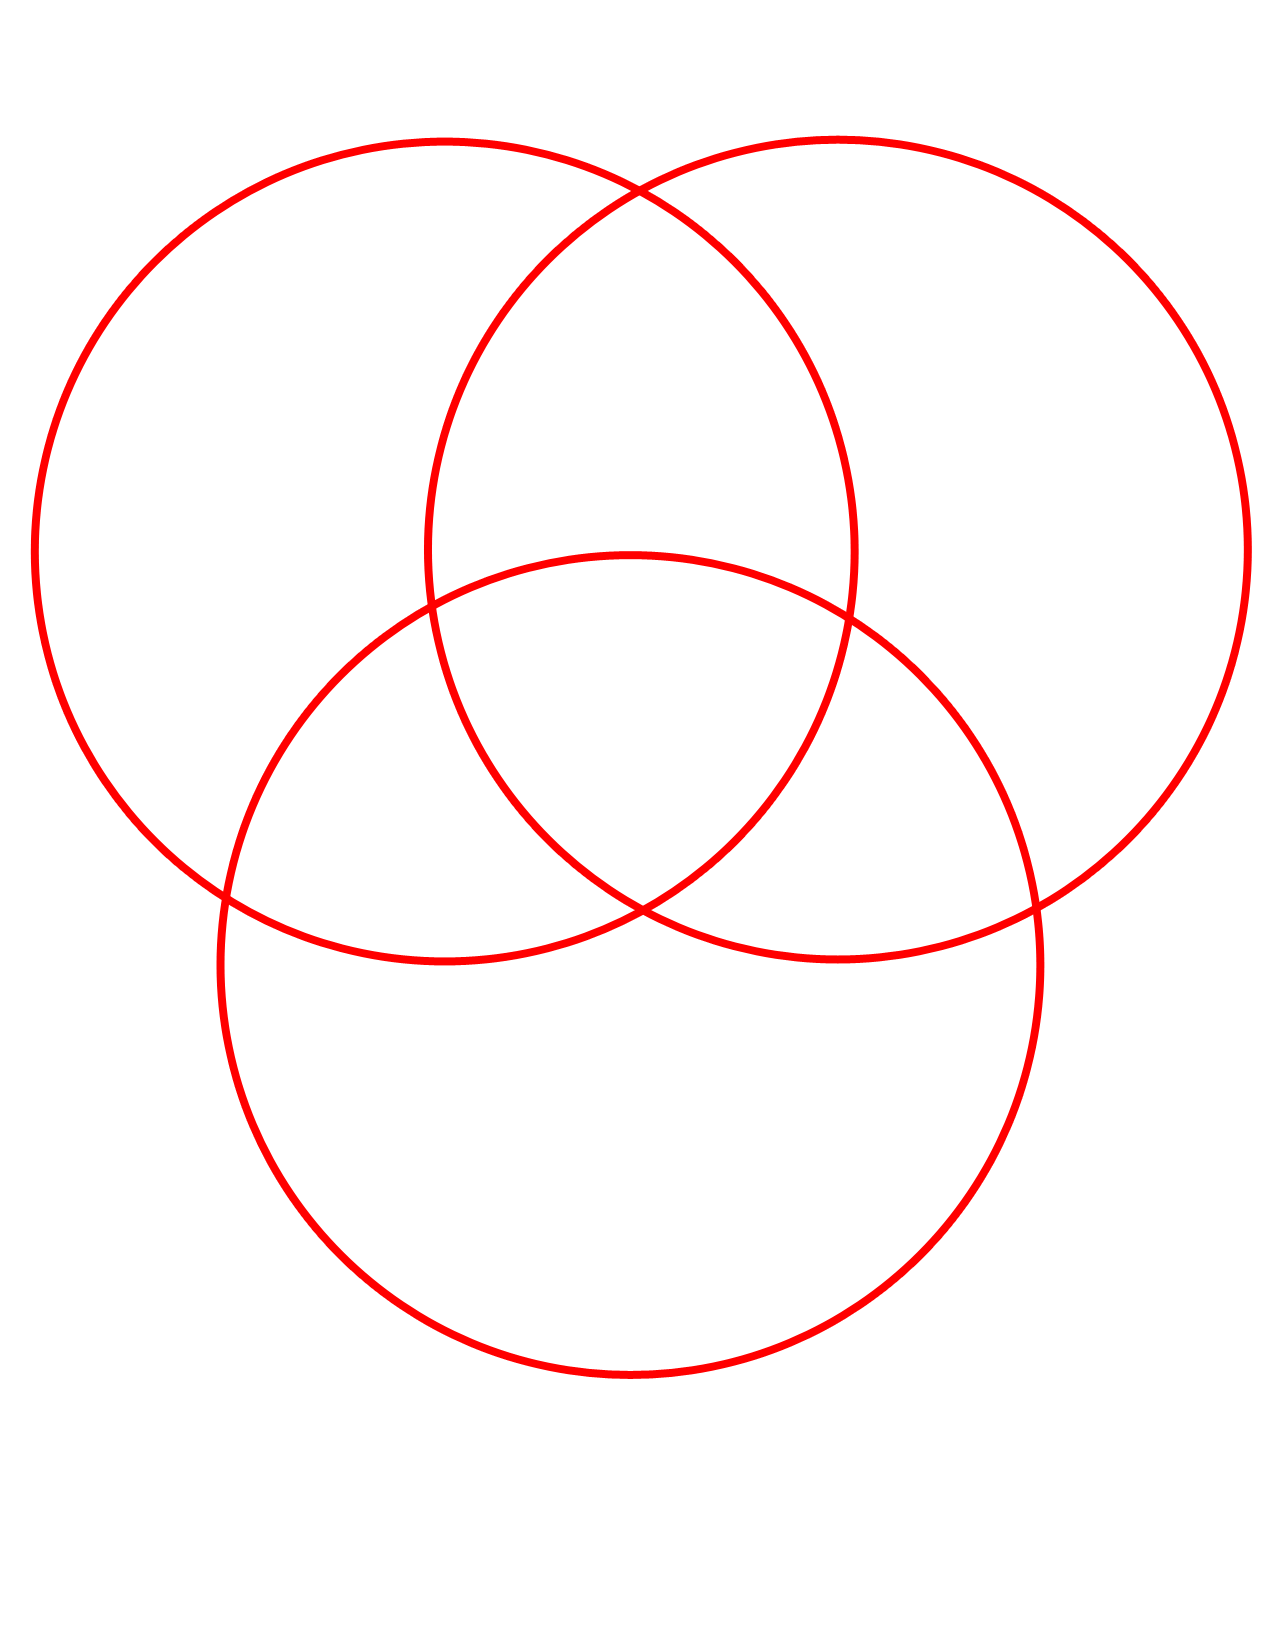 Diagramme De Venn Venn Diagra